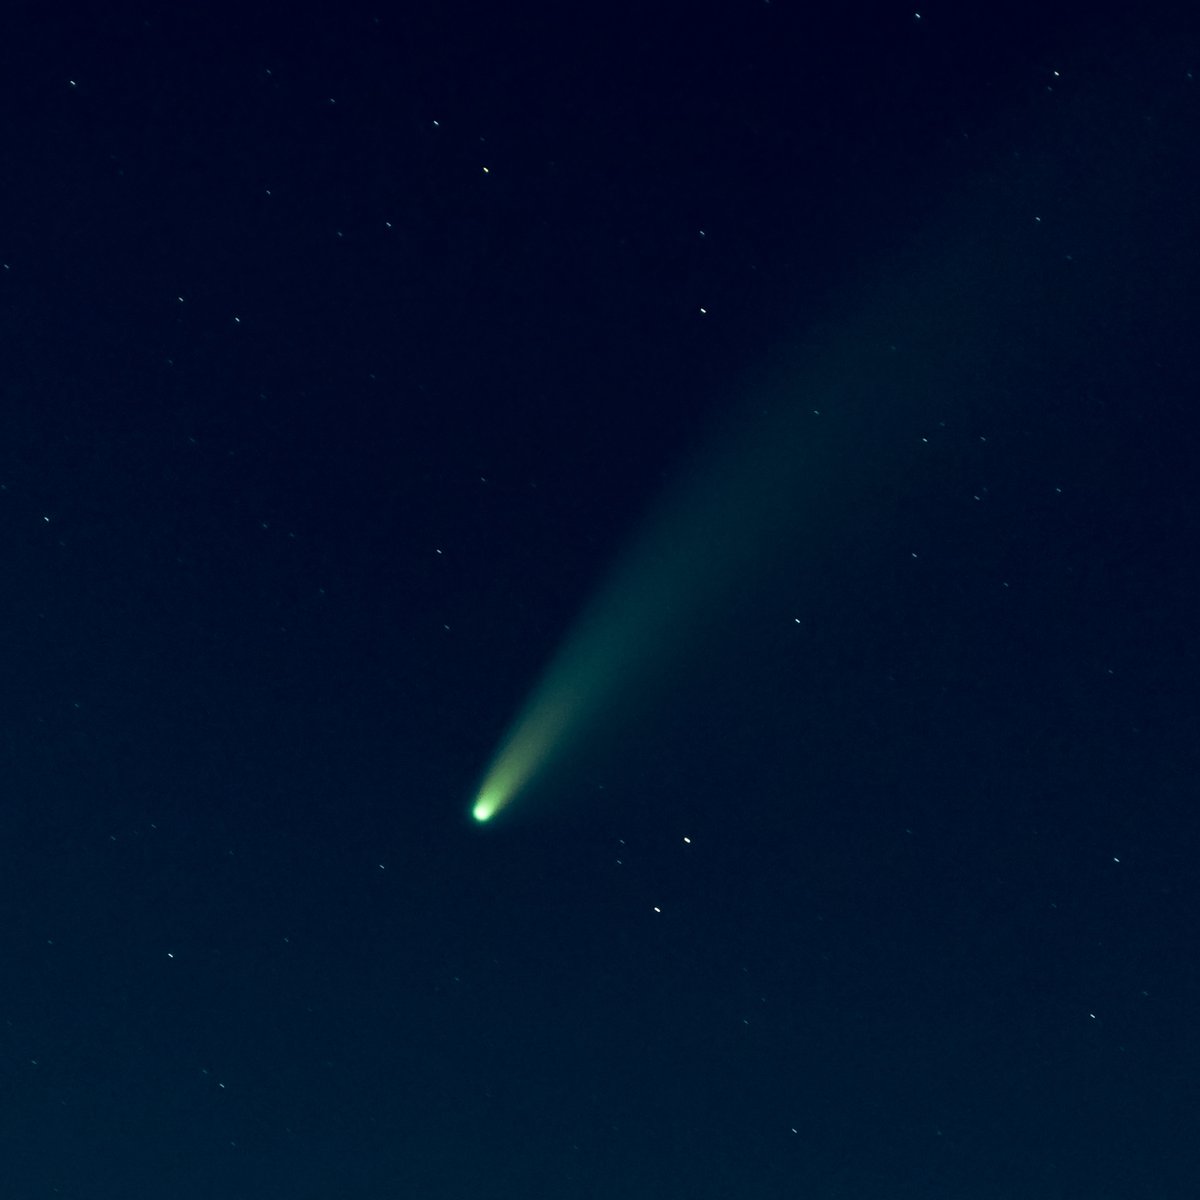 'Big ball of fire' cometa #neowisec2020F3 des de #VilanovadeBellpuig @estelsiplanetes @climadelleida @MeteoMauri @astroprades @Stephencheatley @AstroAventura @astrocatinfo